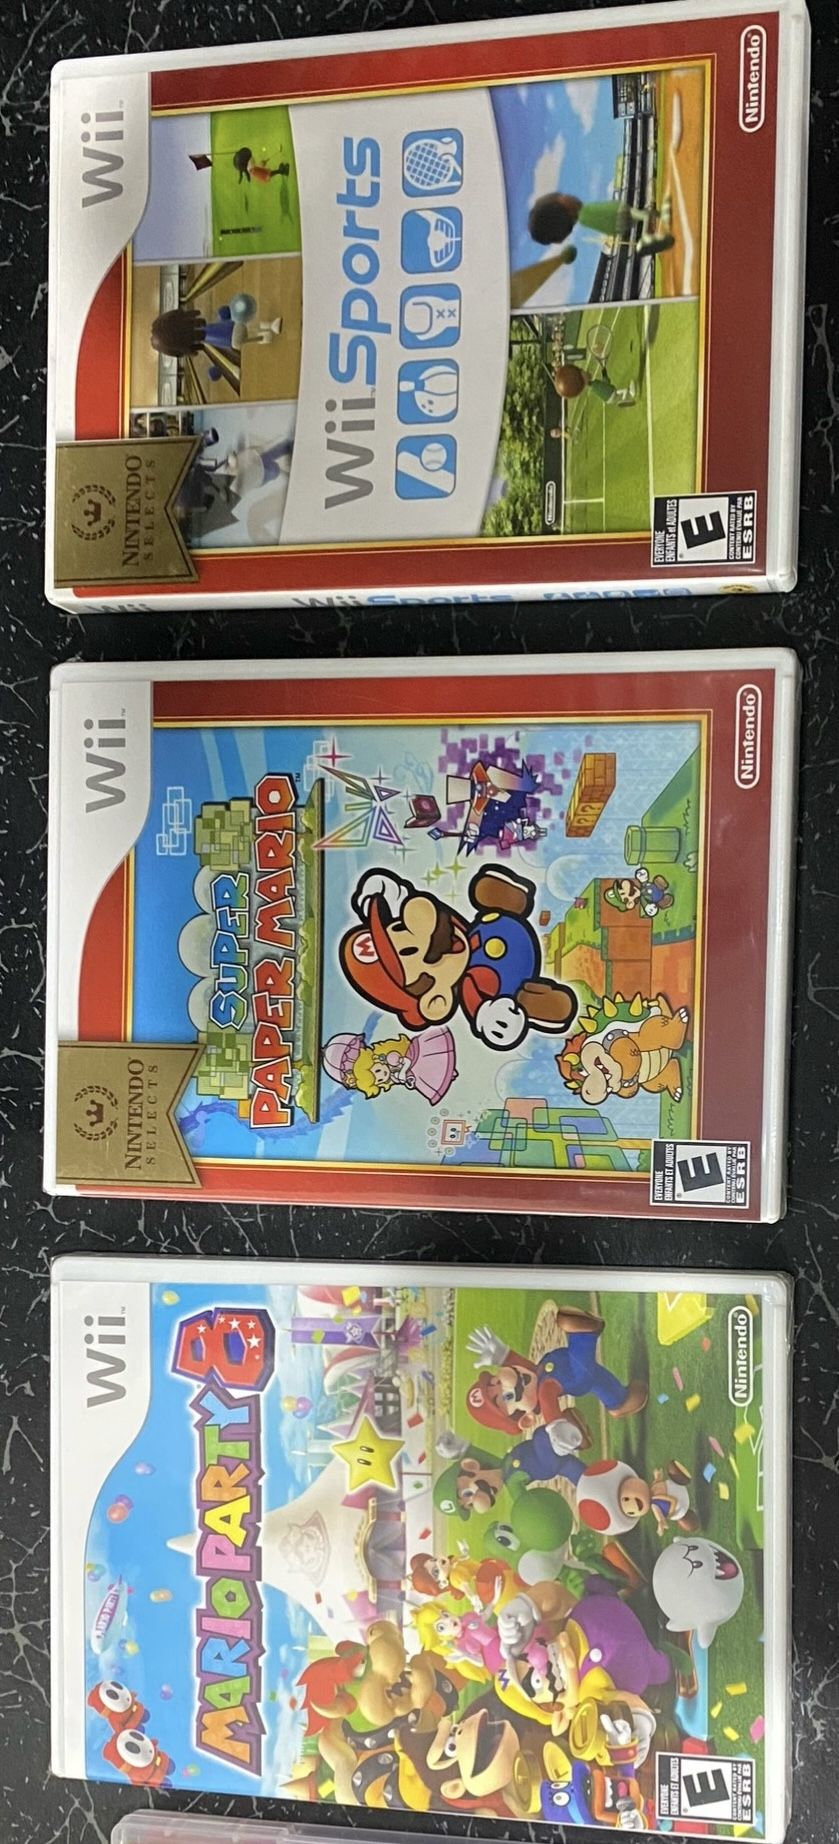 Mario & Nintendo Wii Selects Games